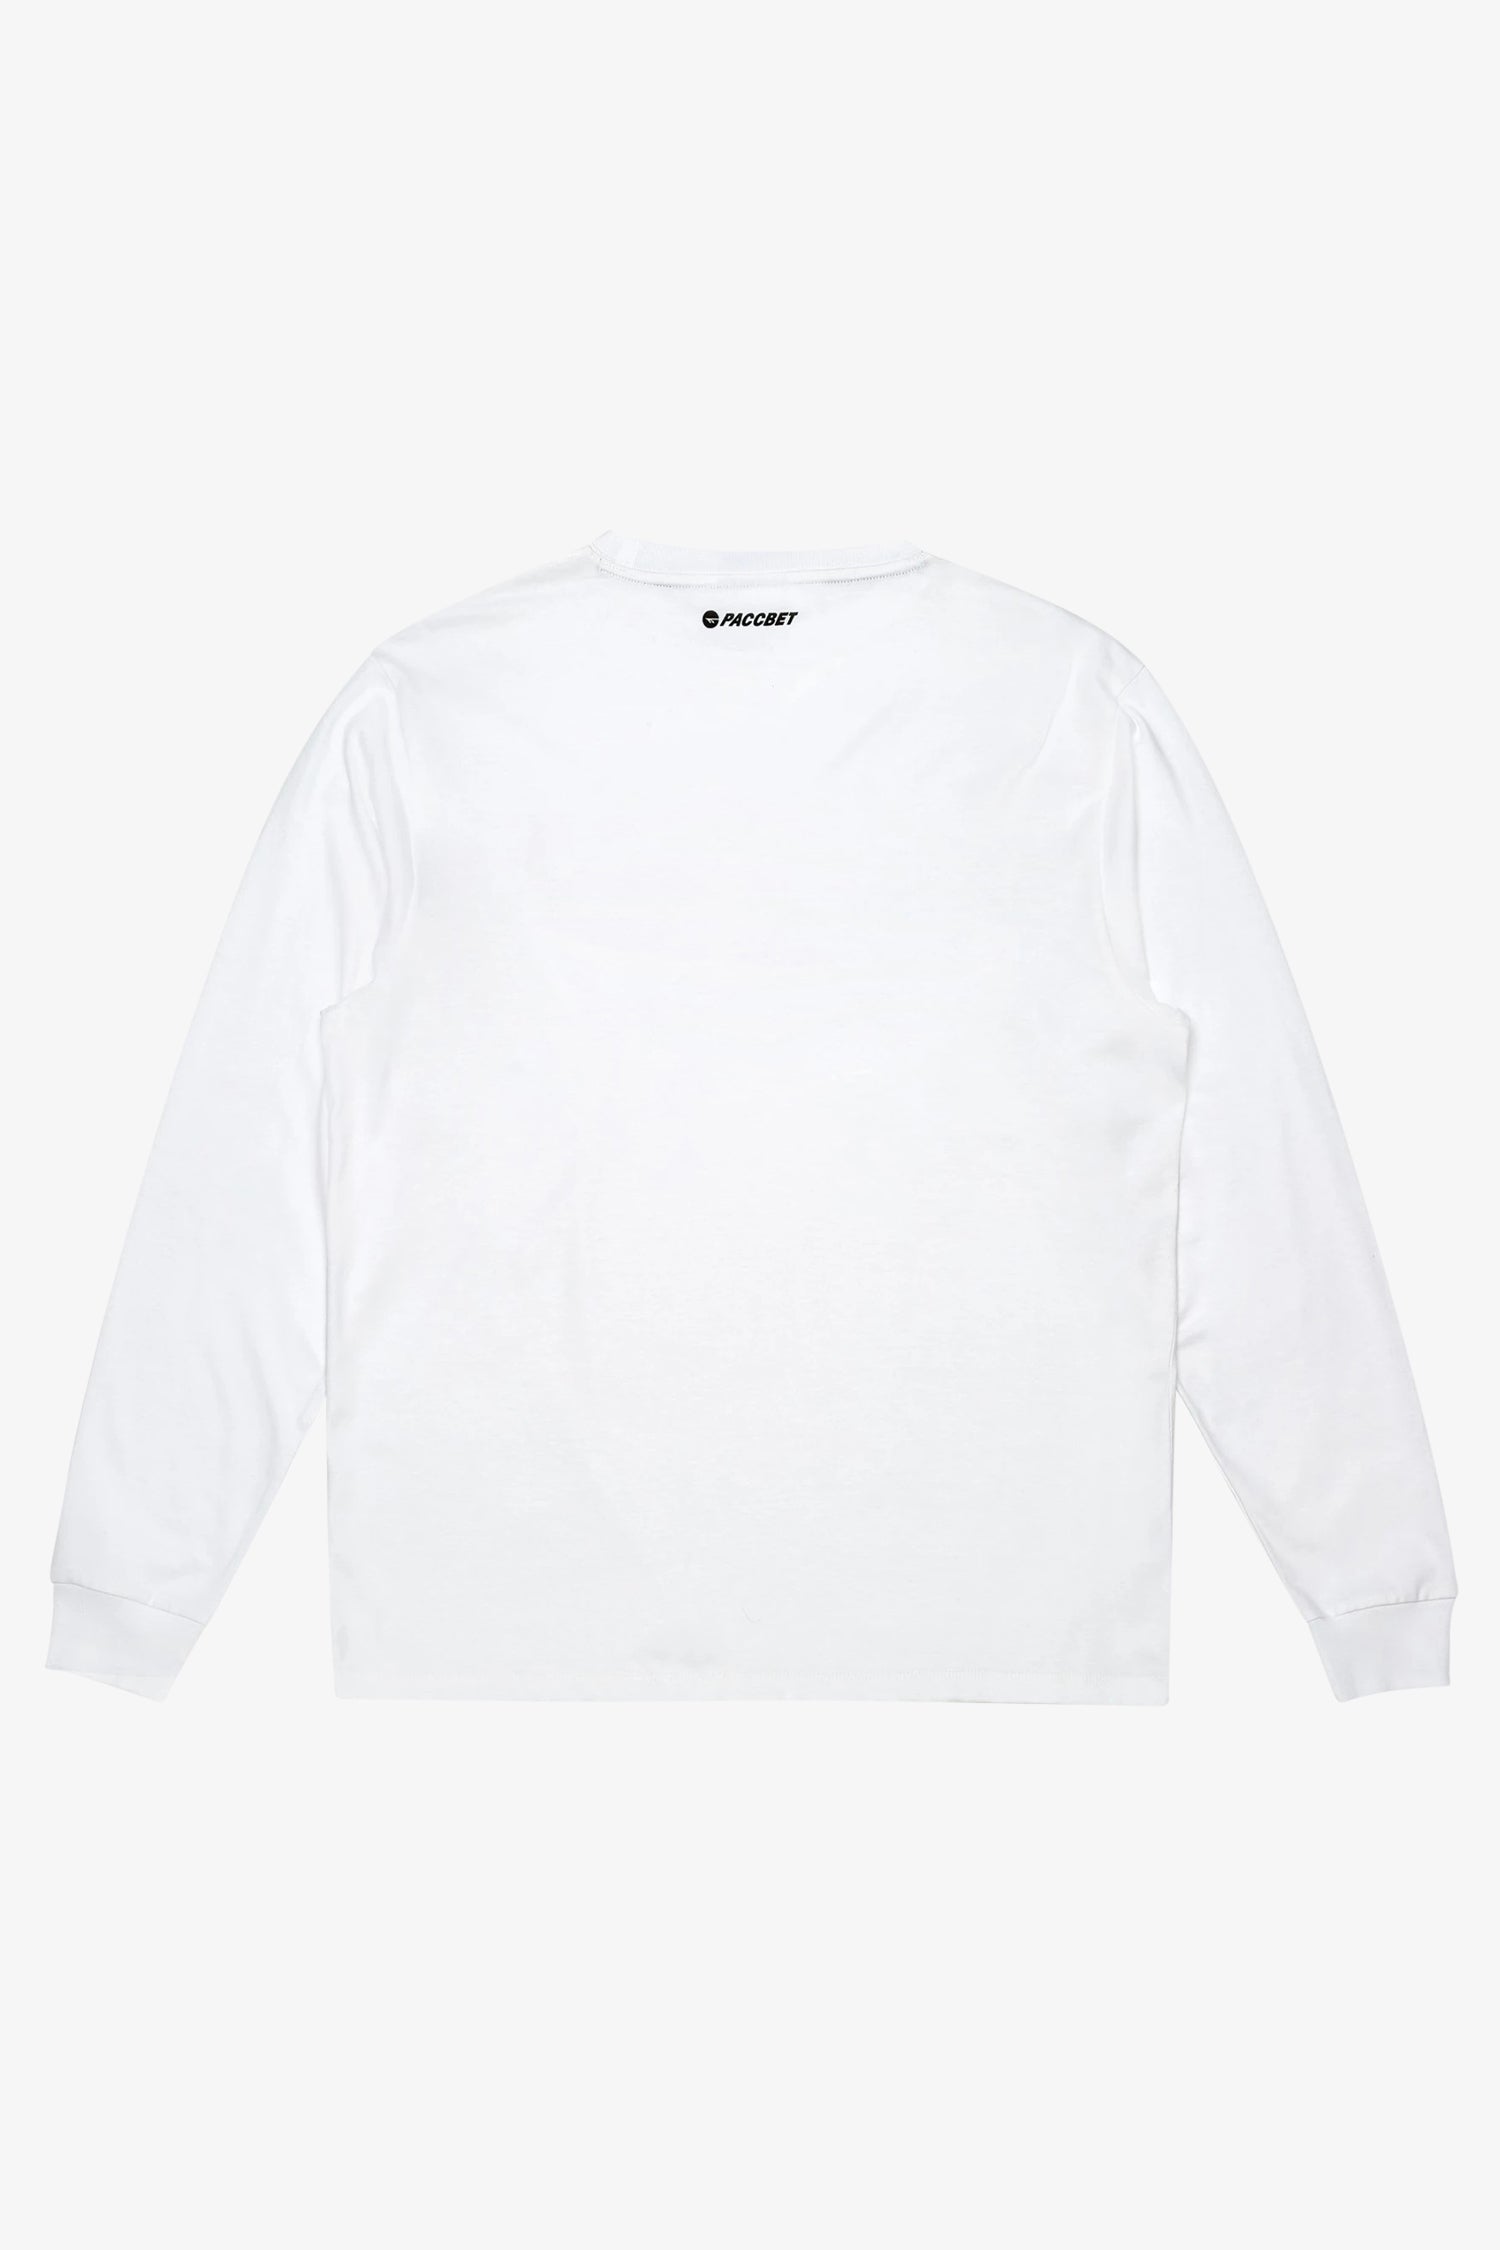 Selectshop FRAME - RASSVET Hi-Tec Long Sleeve T-Shirt Dubai